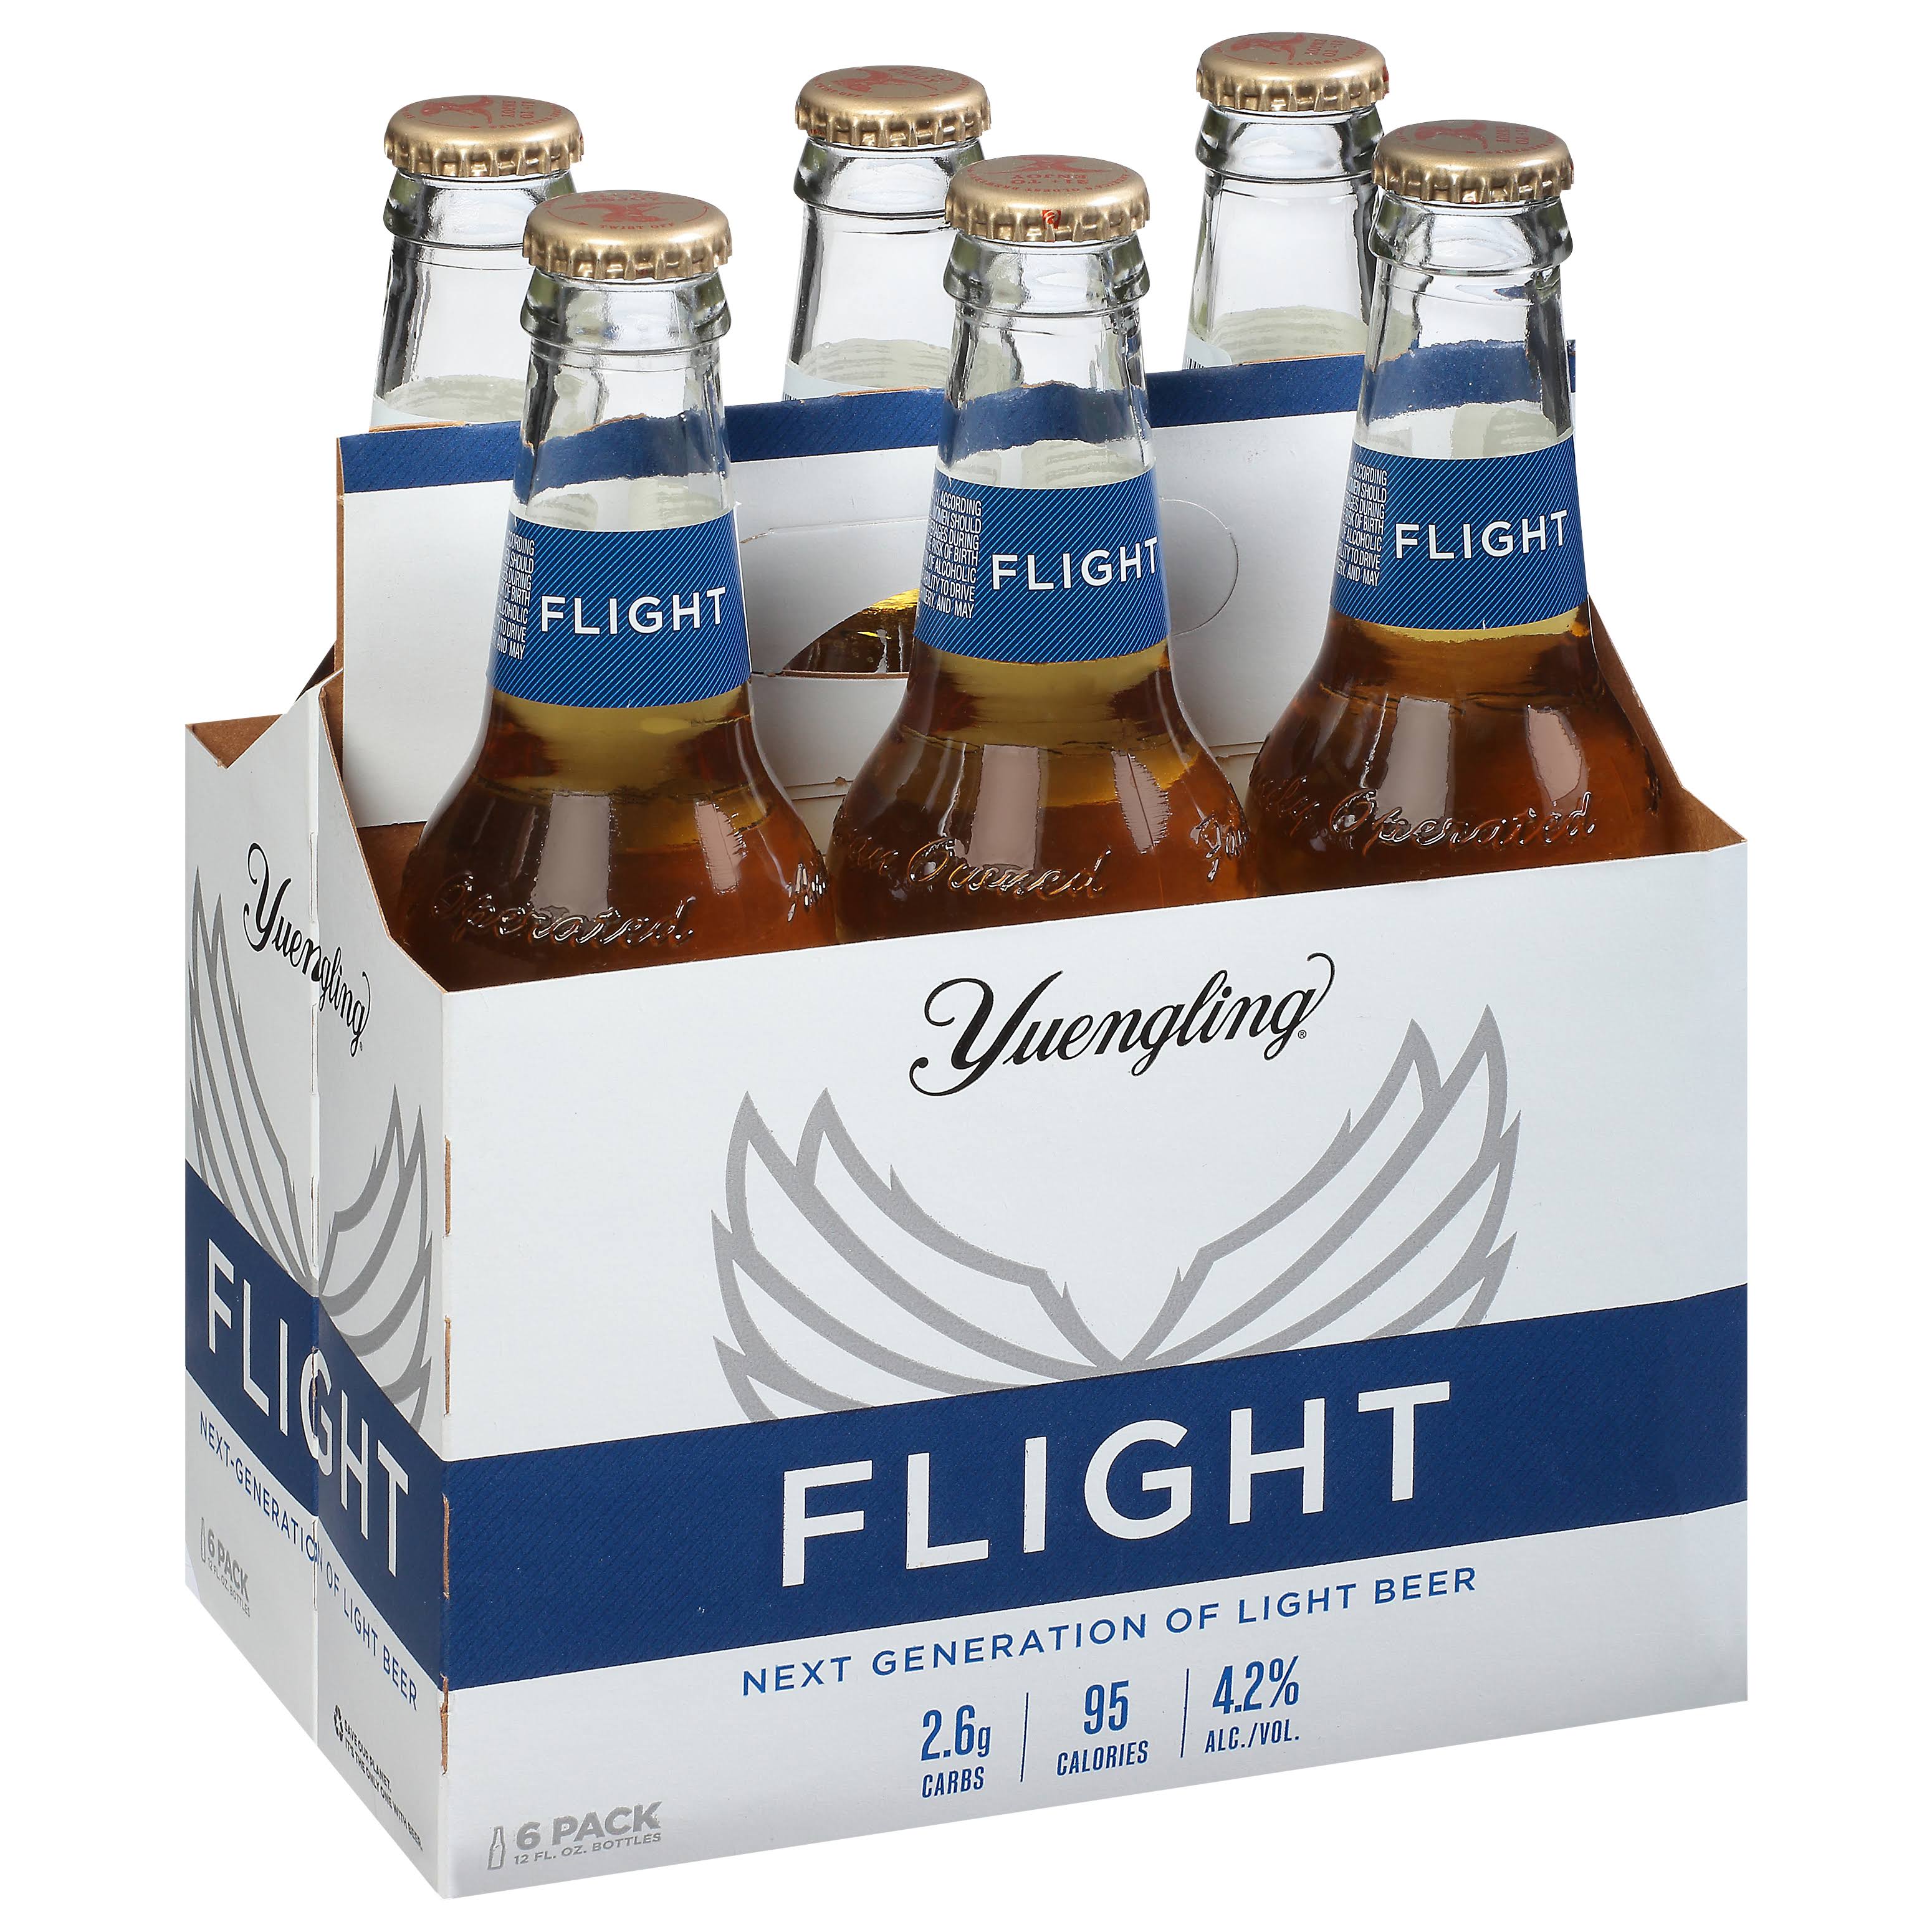 Yuengling Beer, Flight, 6 Pack - 6 pack, 12 fl oz bottles